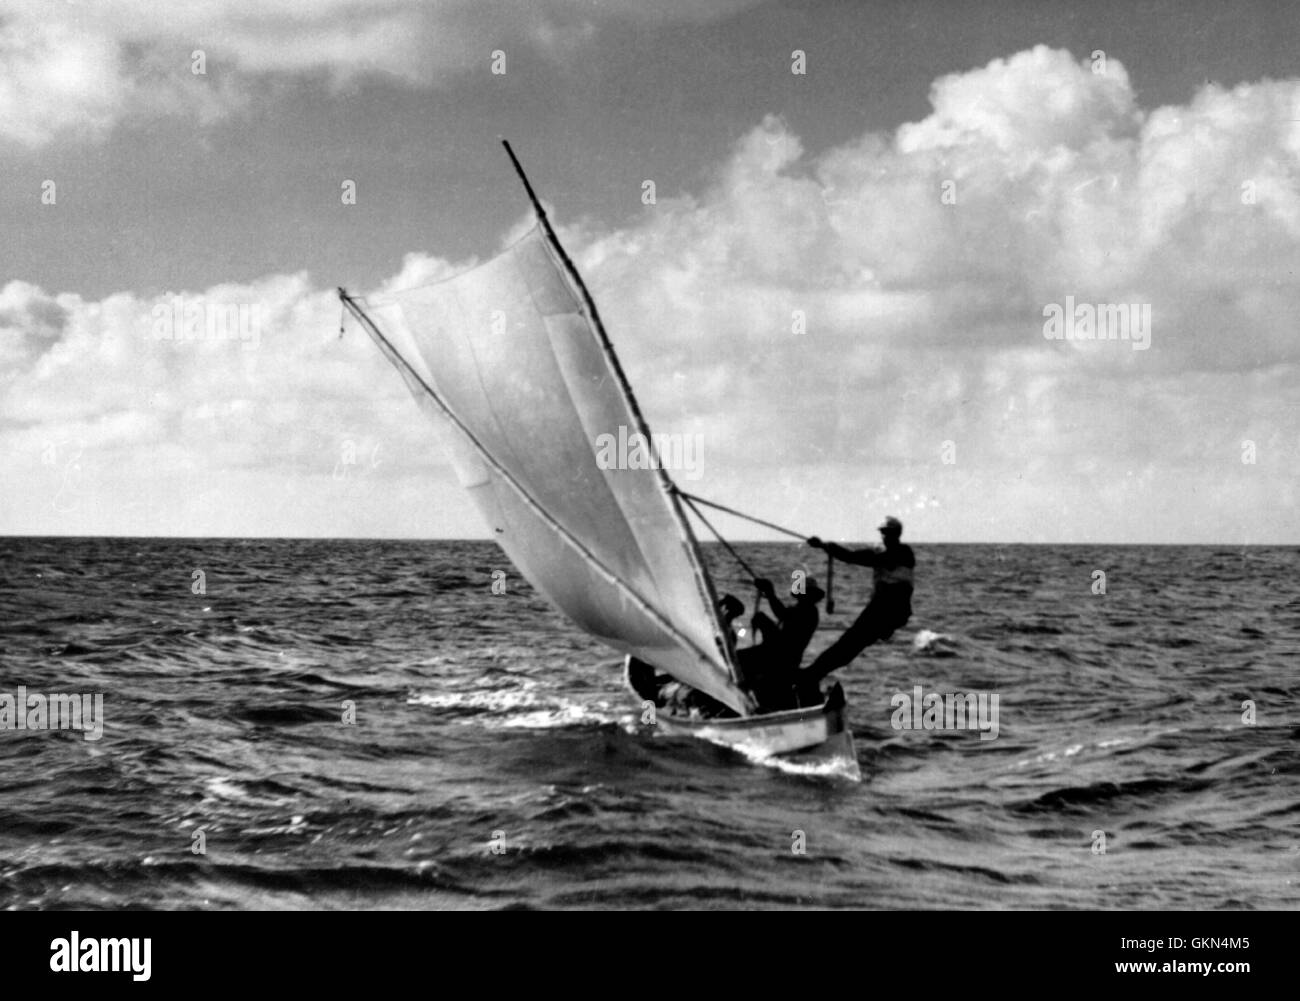 AJAXNETPHOTO. 1954. ST.LUCIA, WEST INDIES. - Vela uno dell'isola canoe da pesca. Foto; REG CALVERT/AJAX ©AJAX NEWS & FEATURE SERVICE/REG CALVERT collezione REF:canoa_RC1954_2 Foto Stock